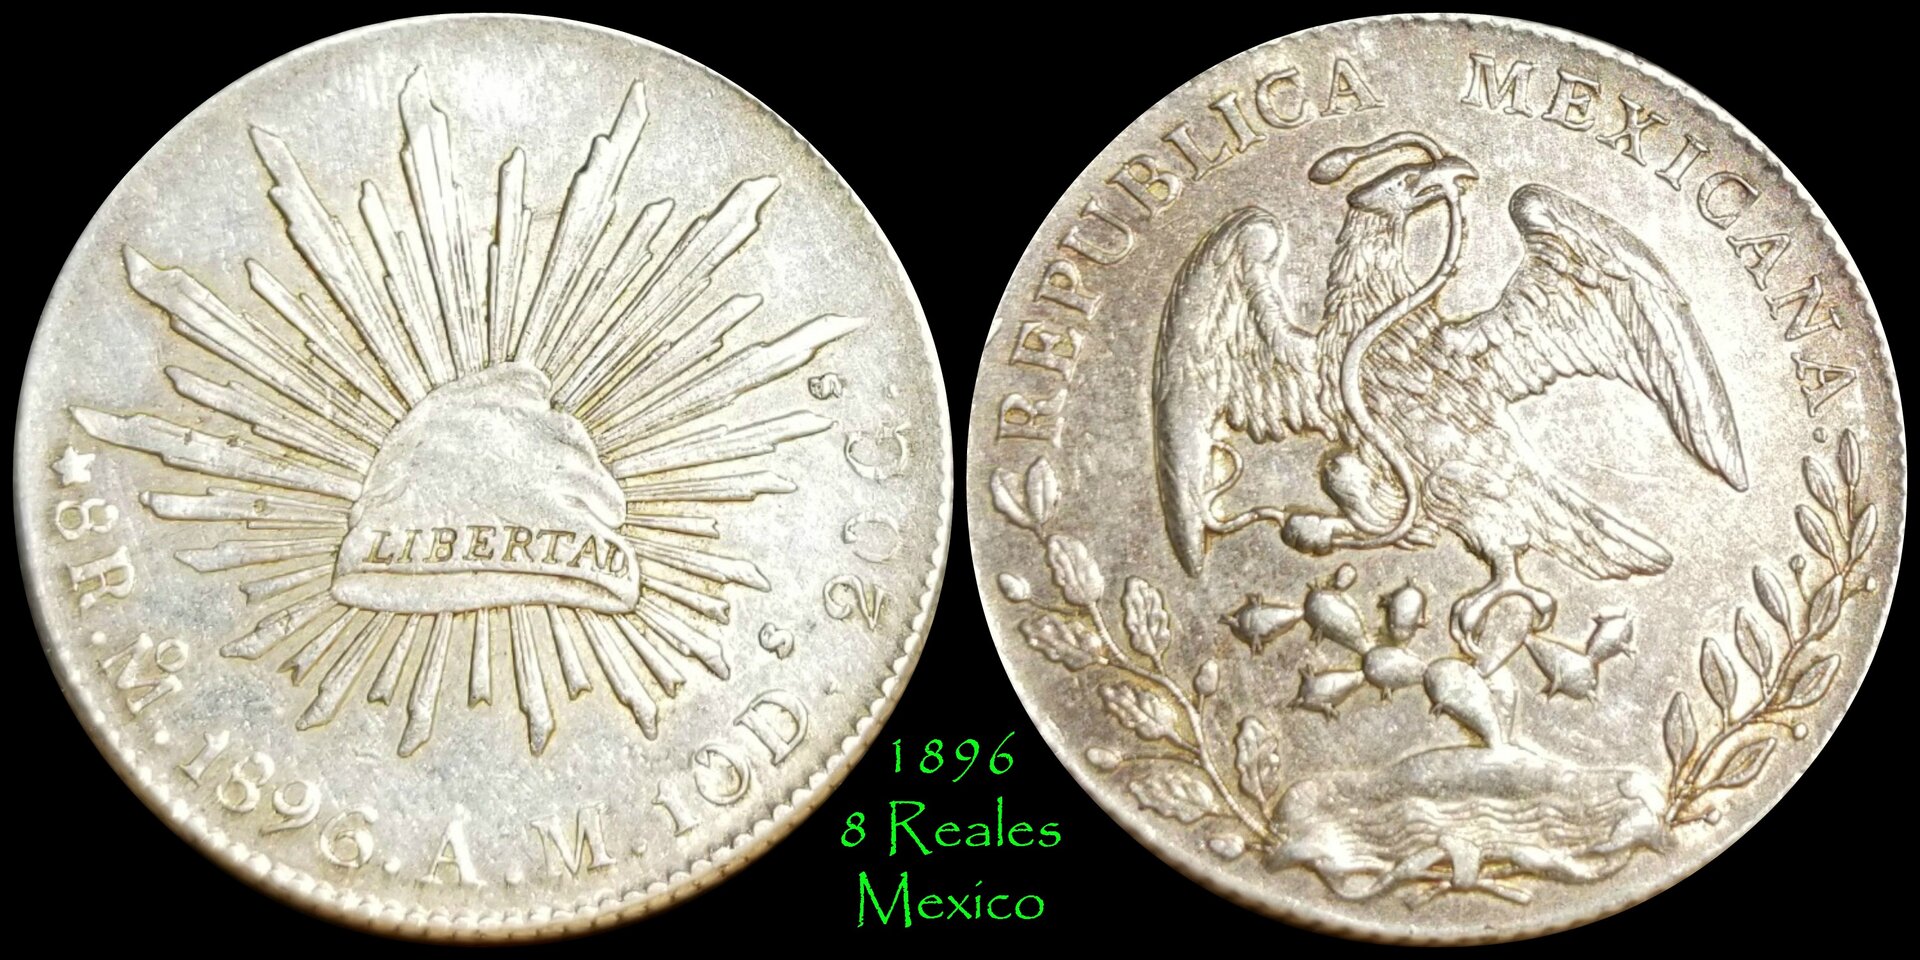 1896 8R Mexico.jpg